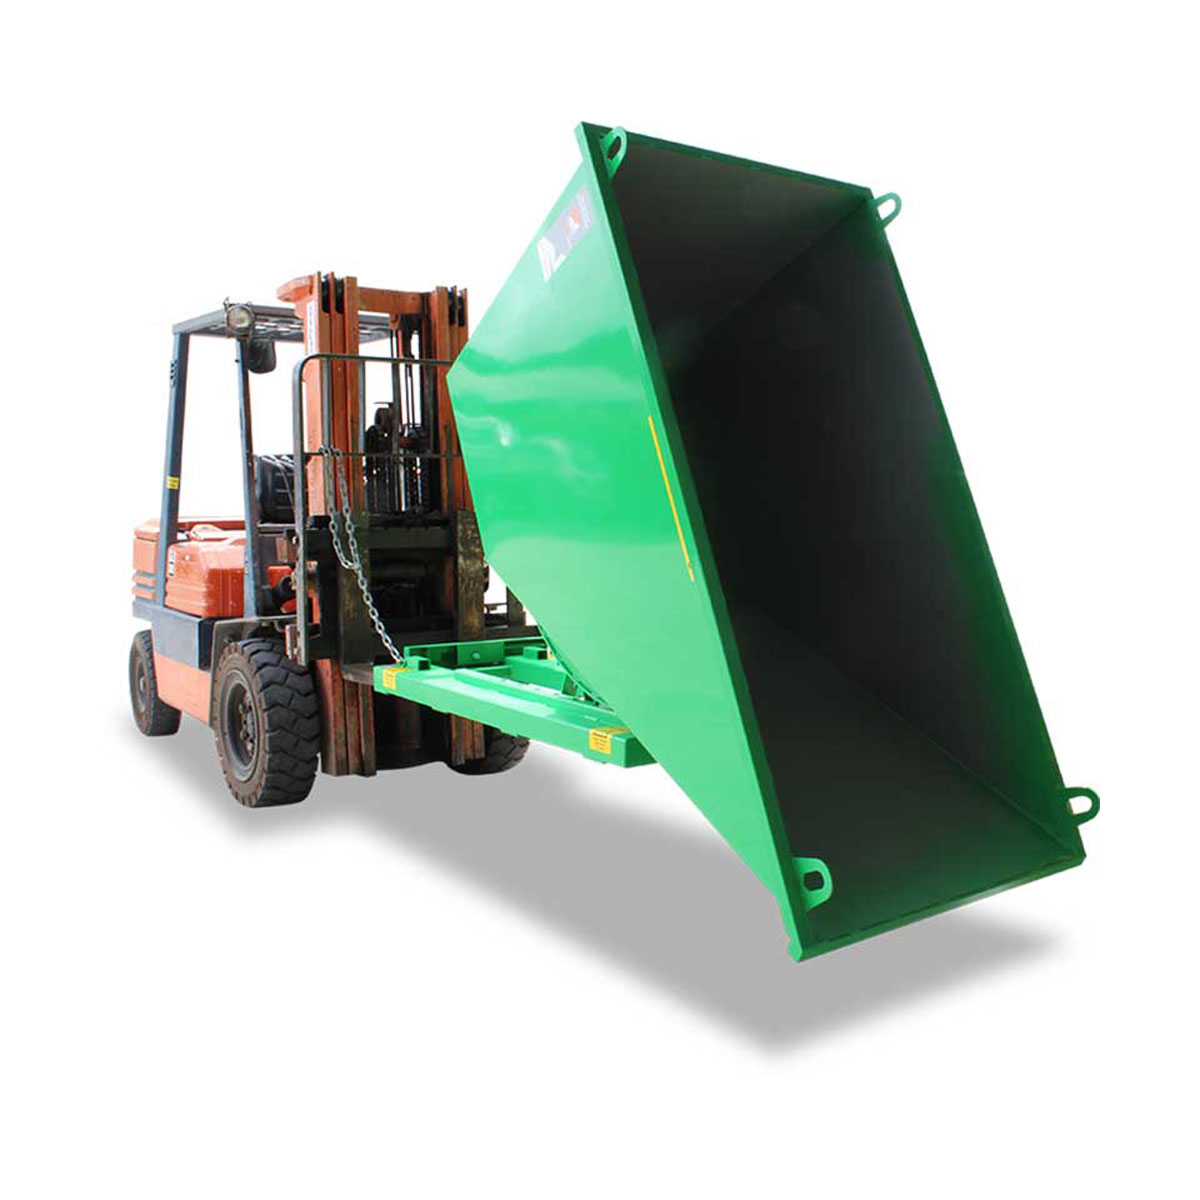 Hopper - Self-tipping Forklift Attachment